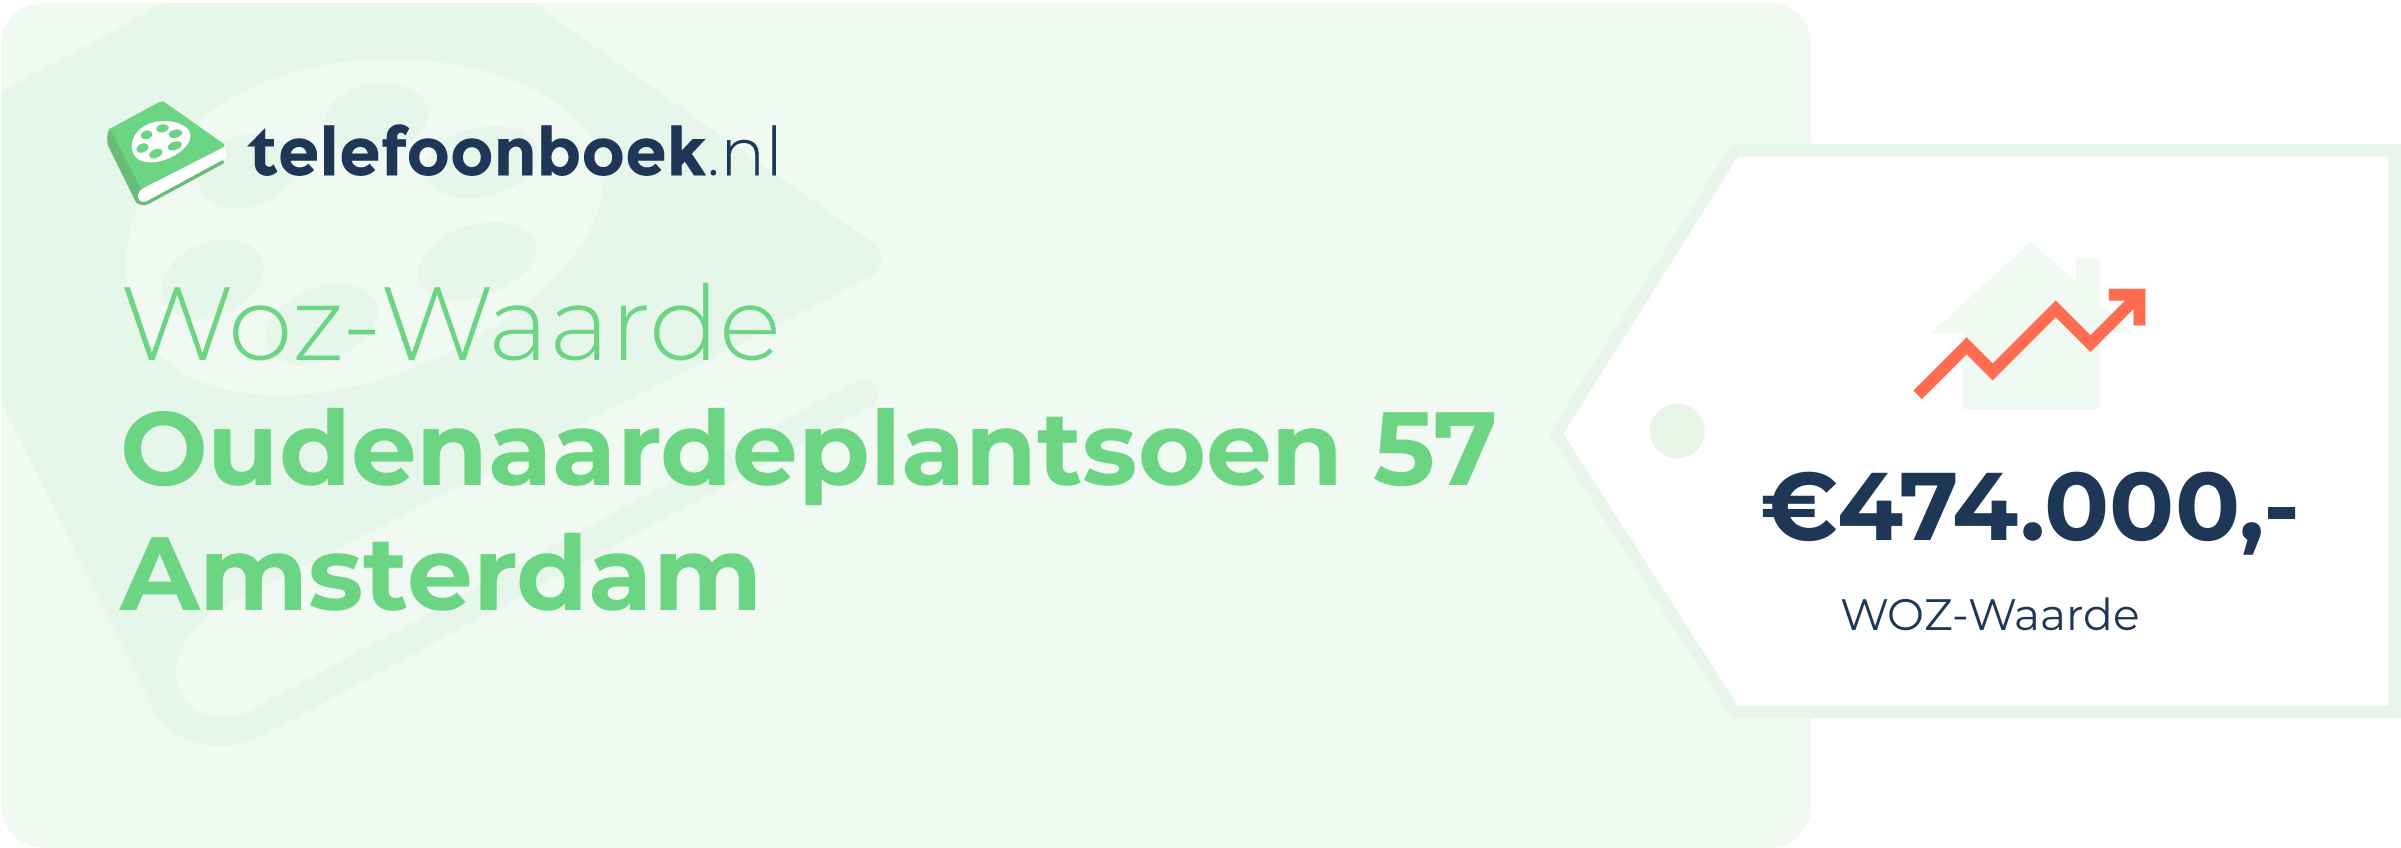 WOZ-waarde Oudenaardeplantsoen 57 Amsterdam